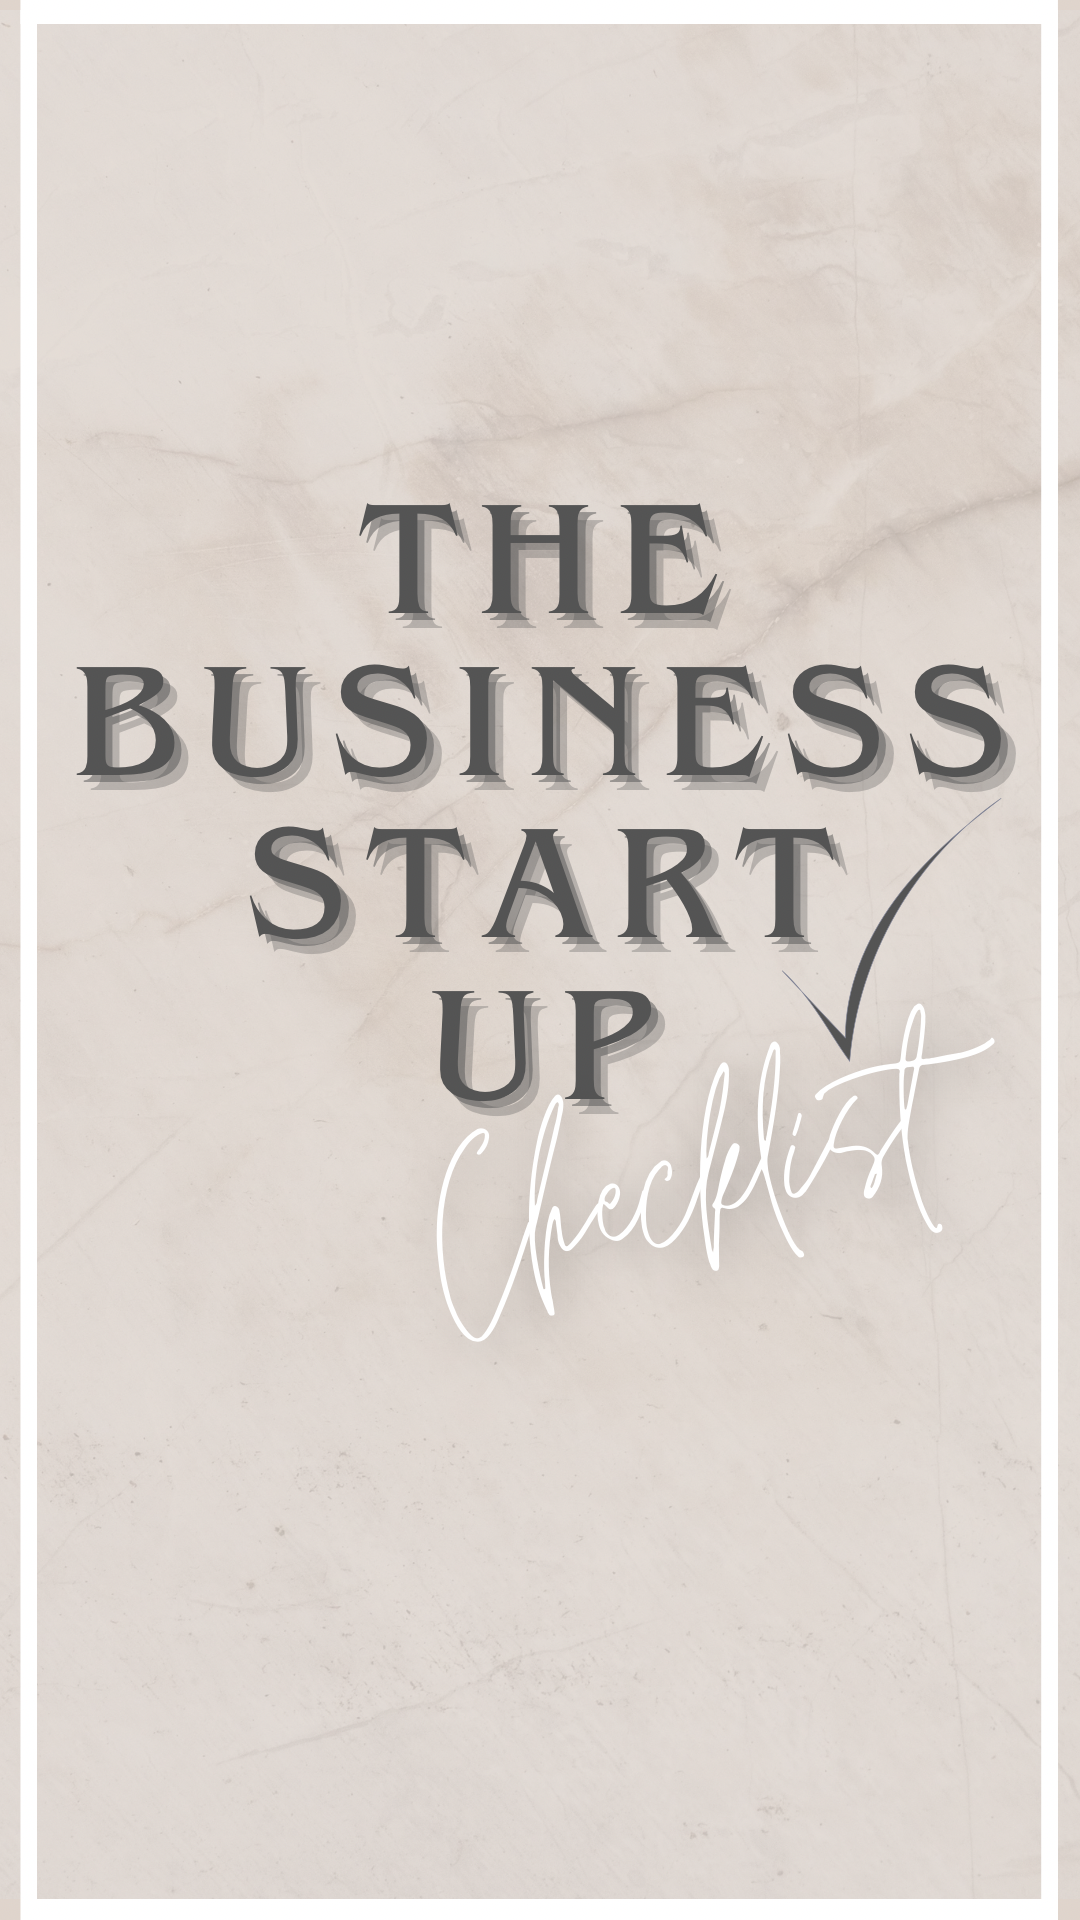 The Business Start Up Checklist